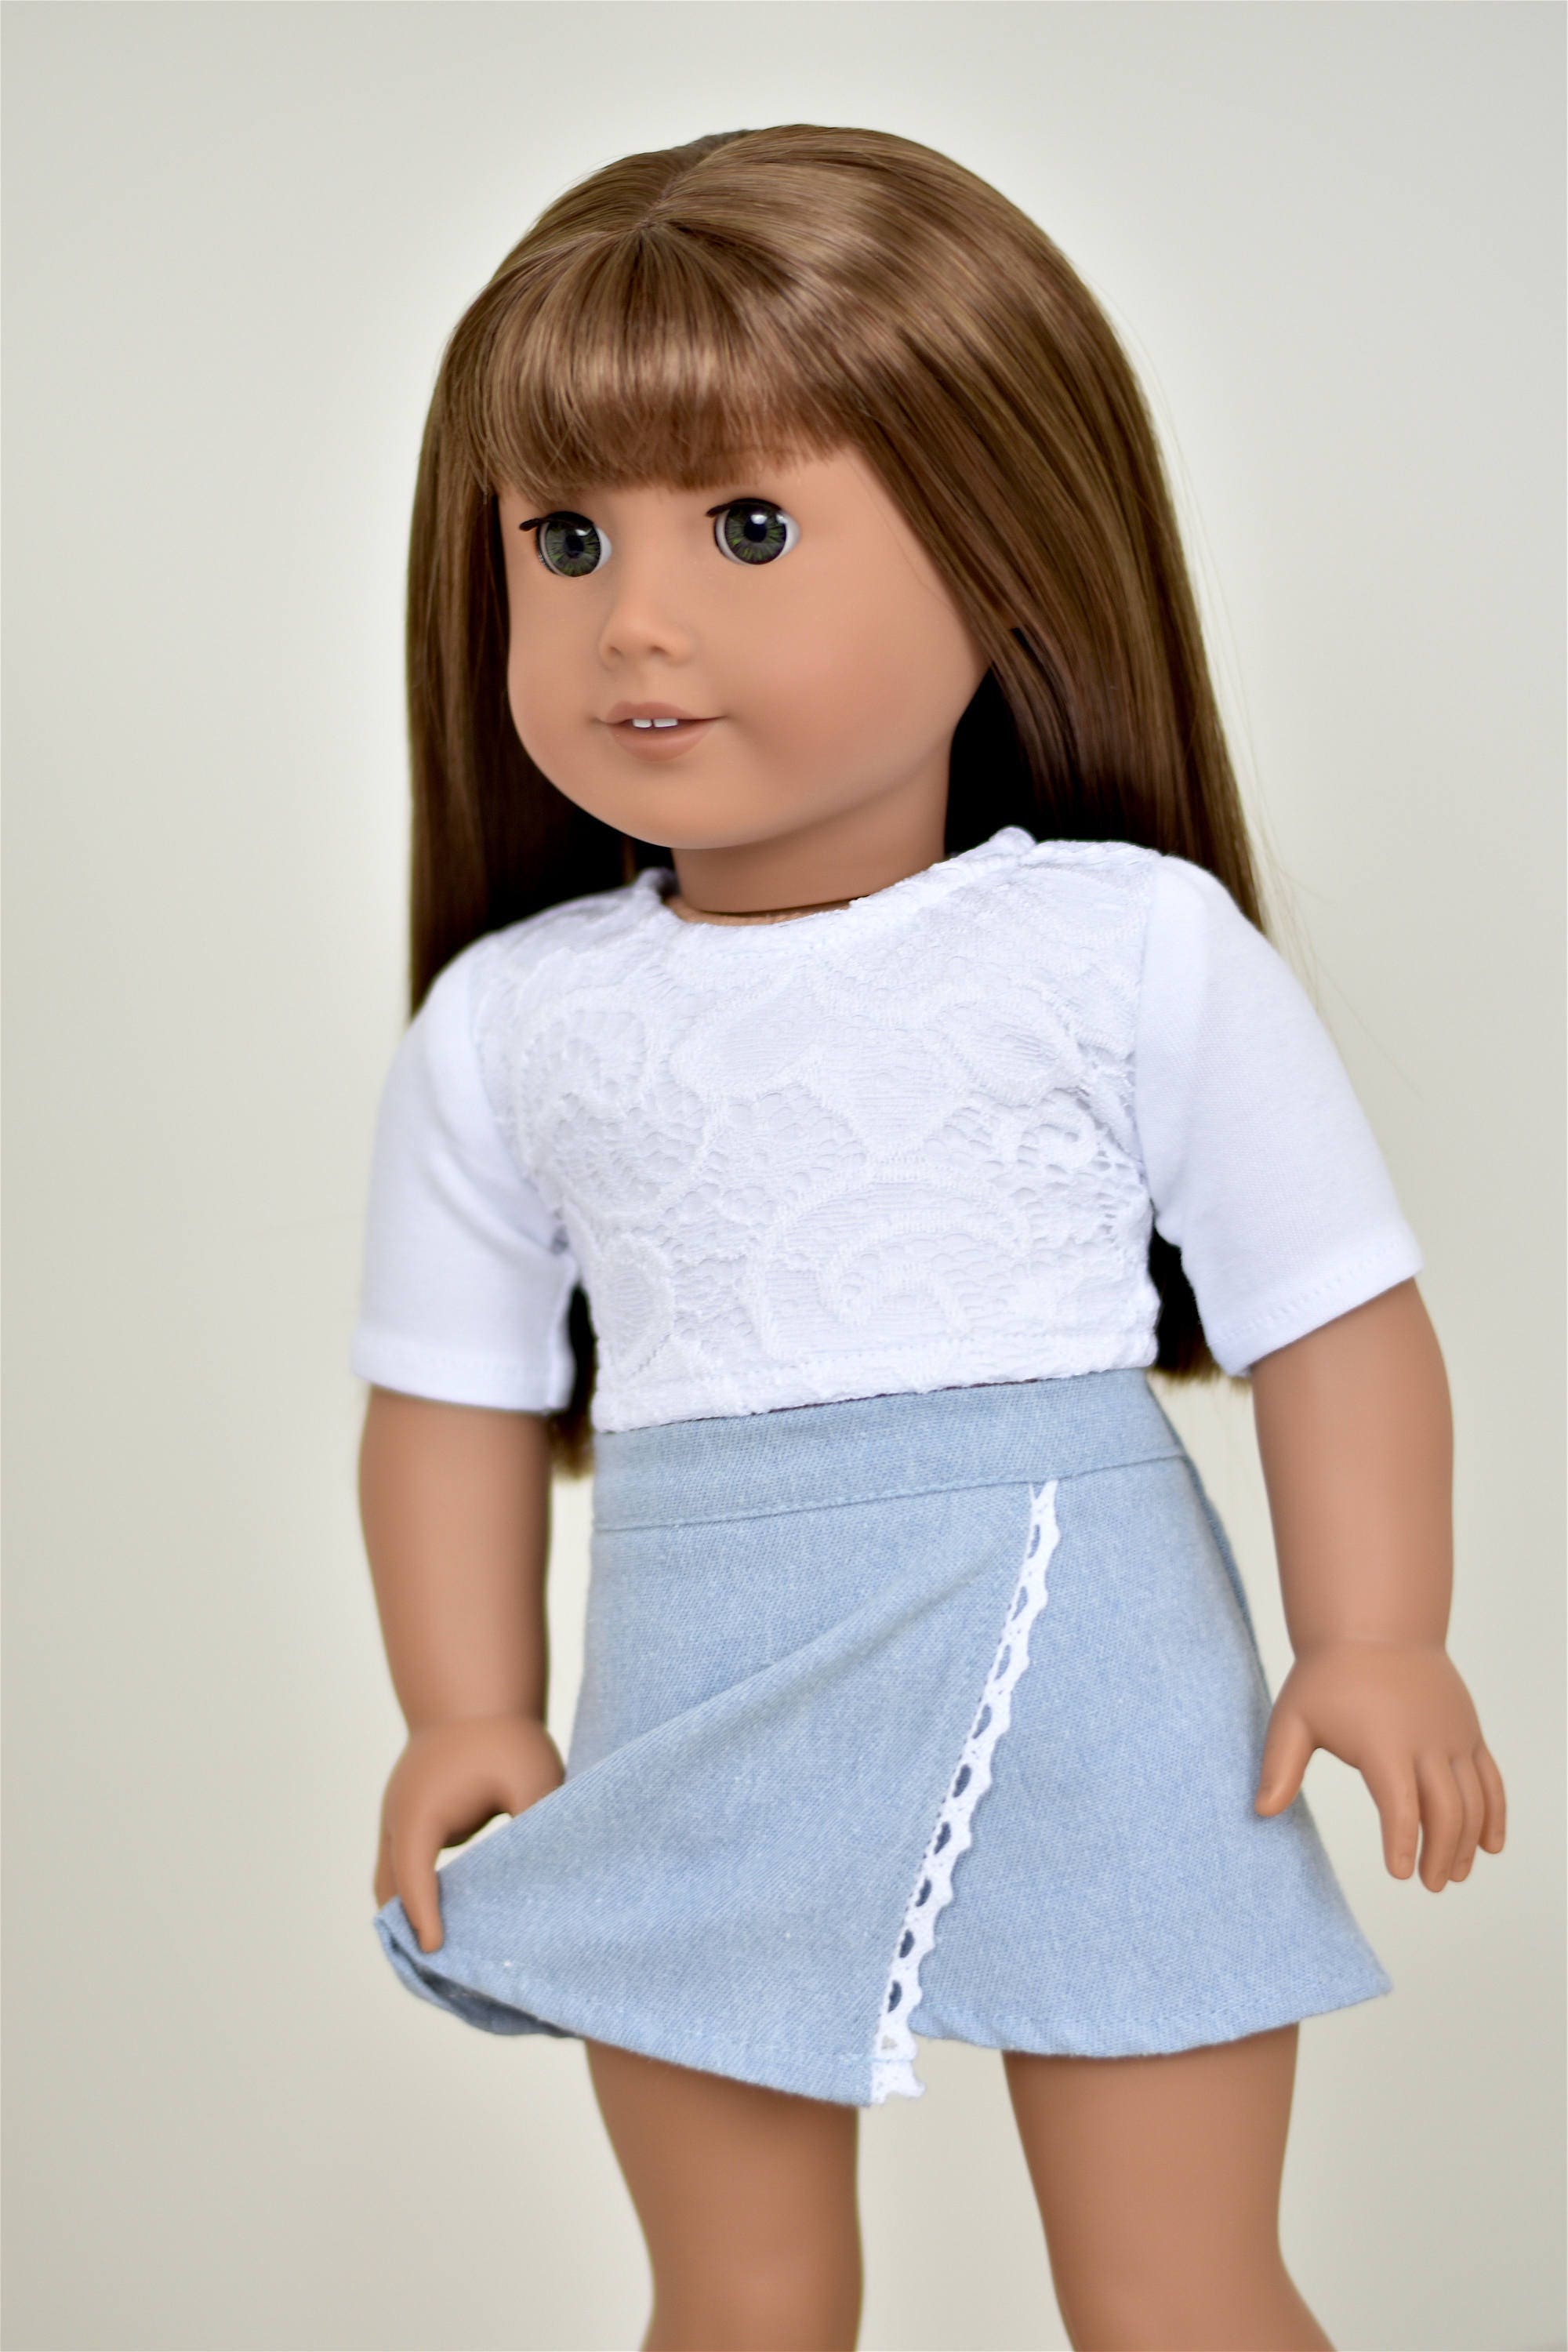 UnEven Denim Skirt 18 inch doll clothes